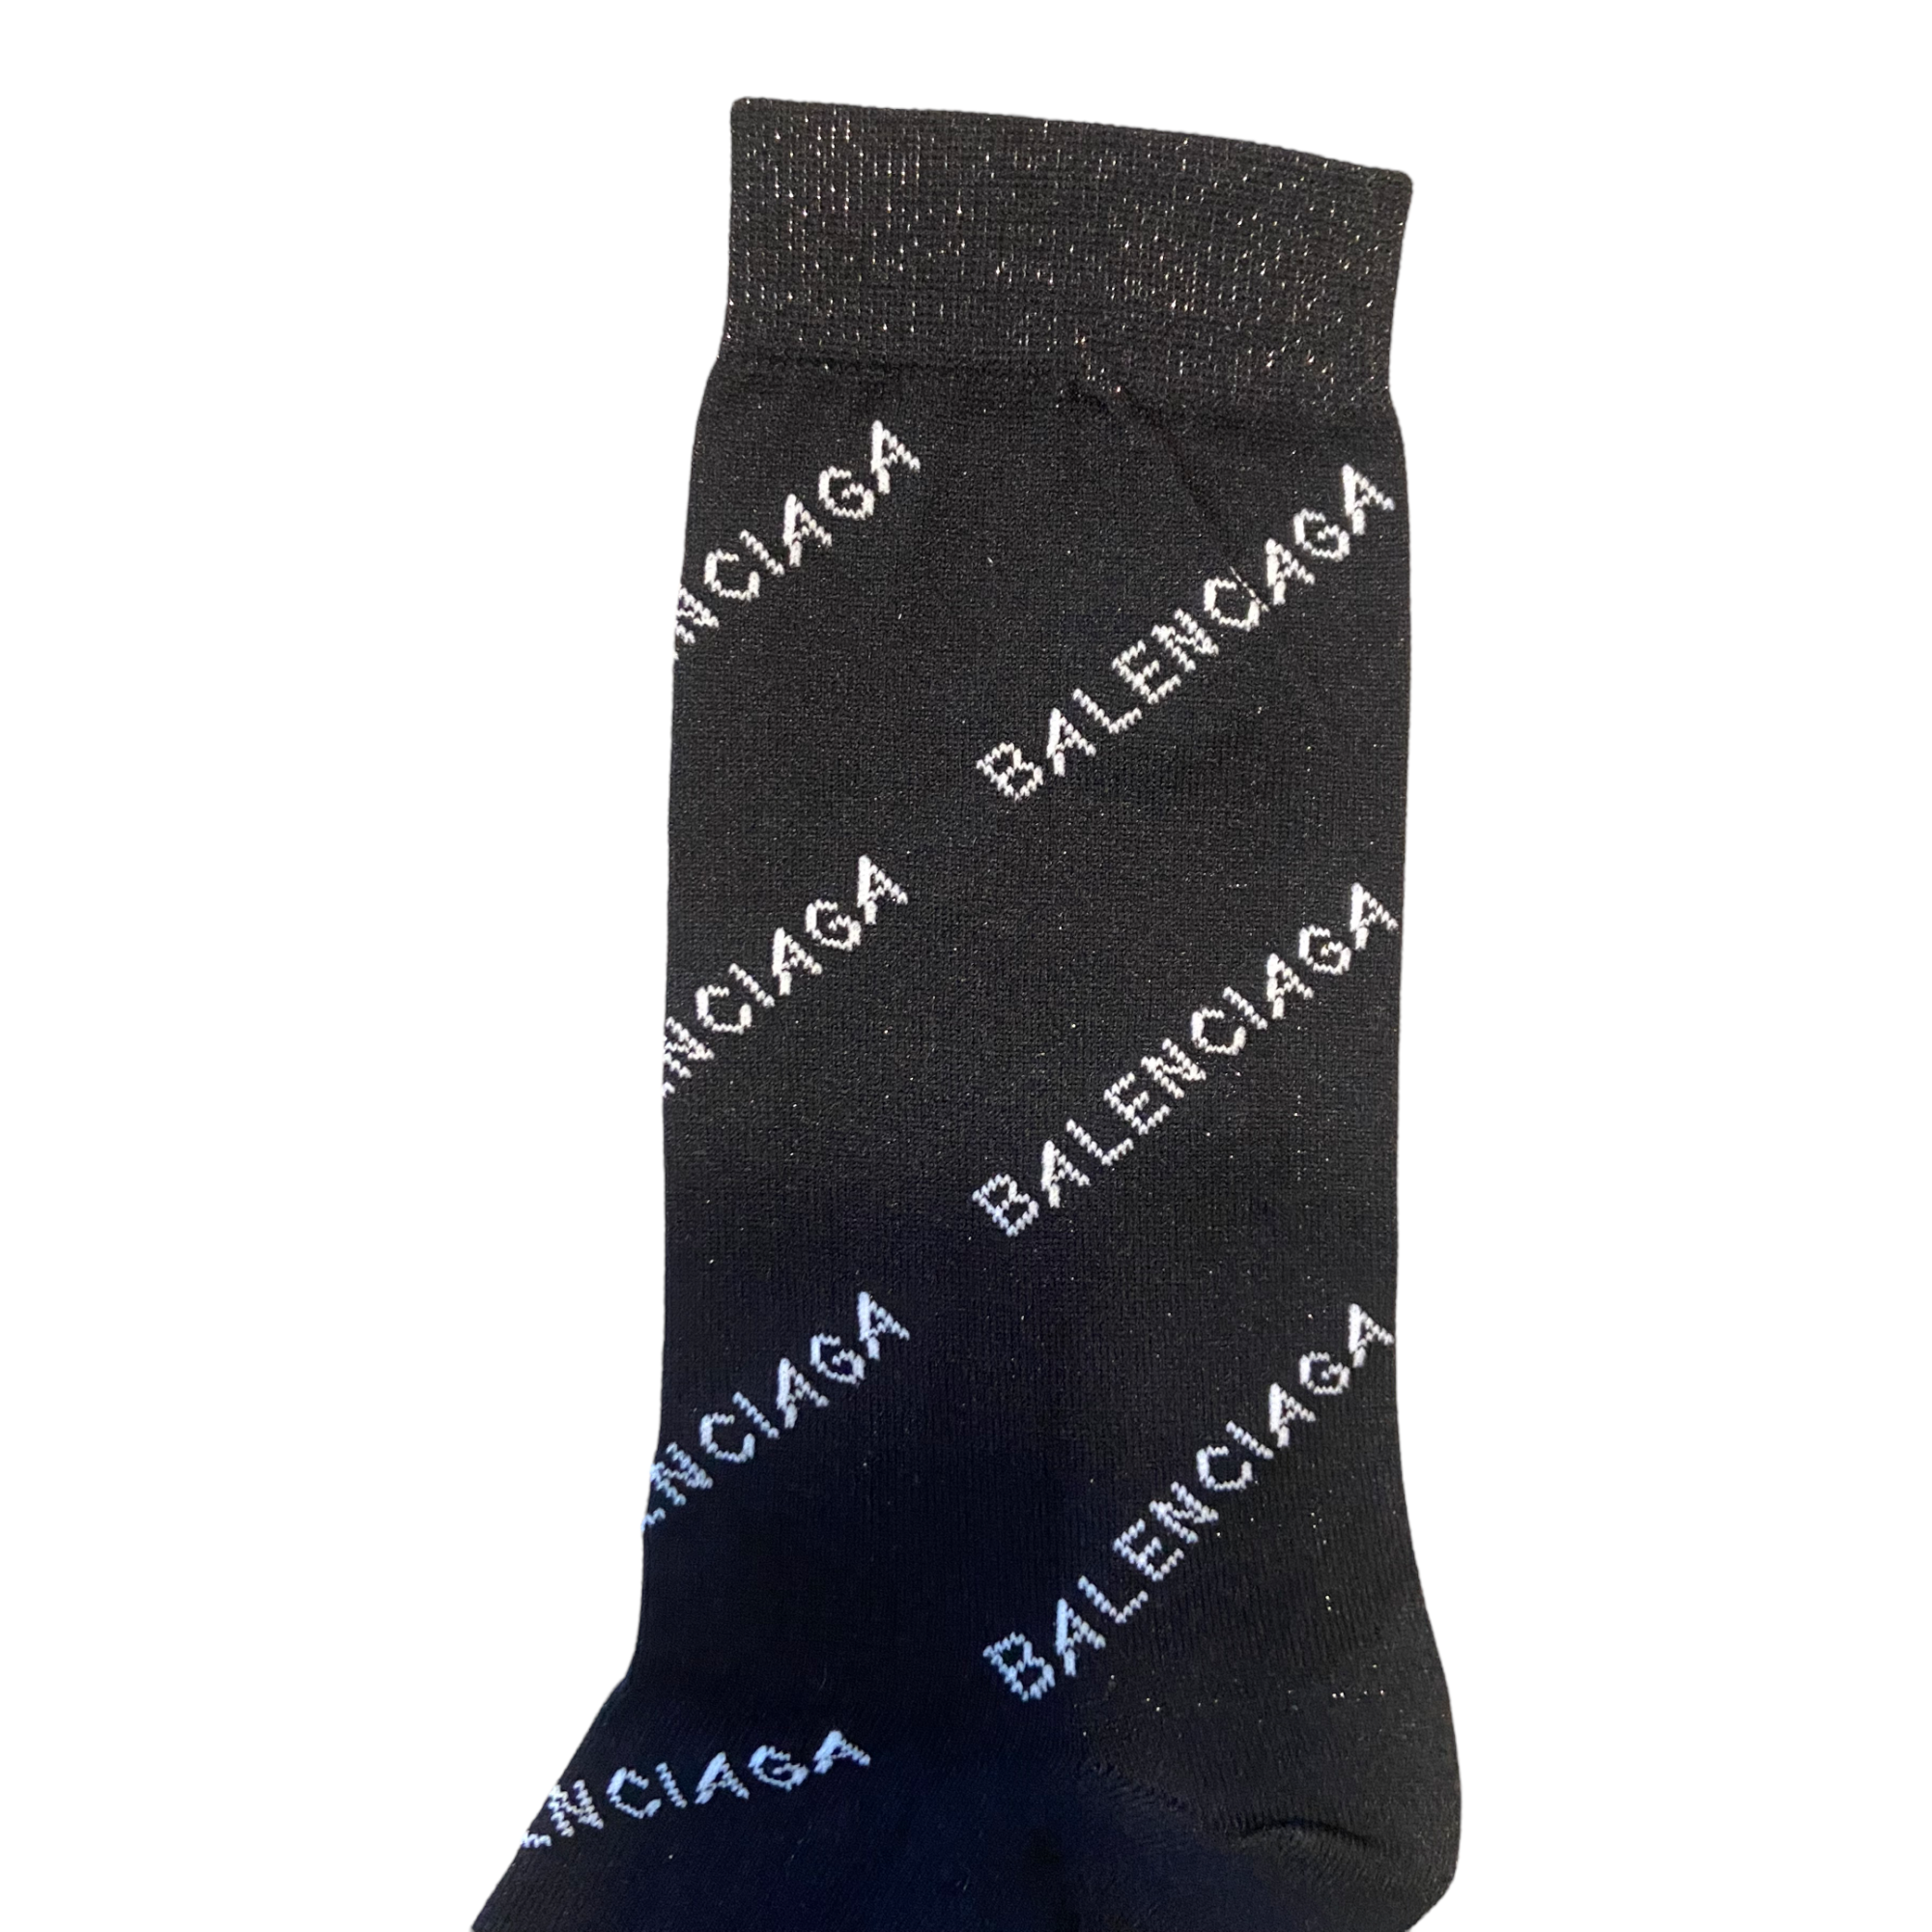 Balenci Inspired Tights Material Socks- Black